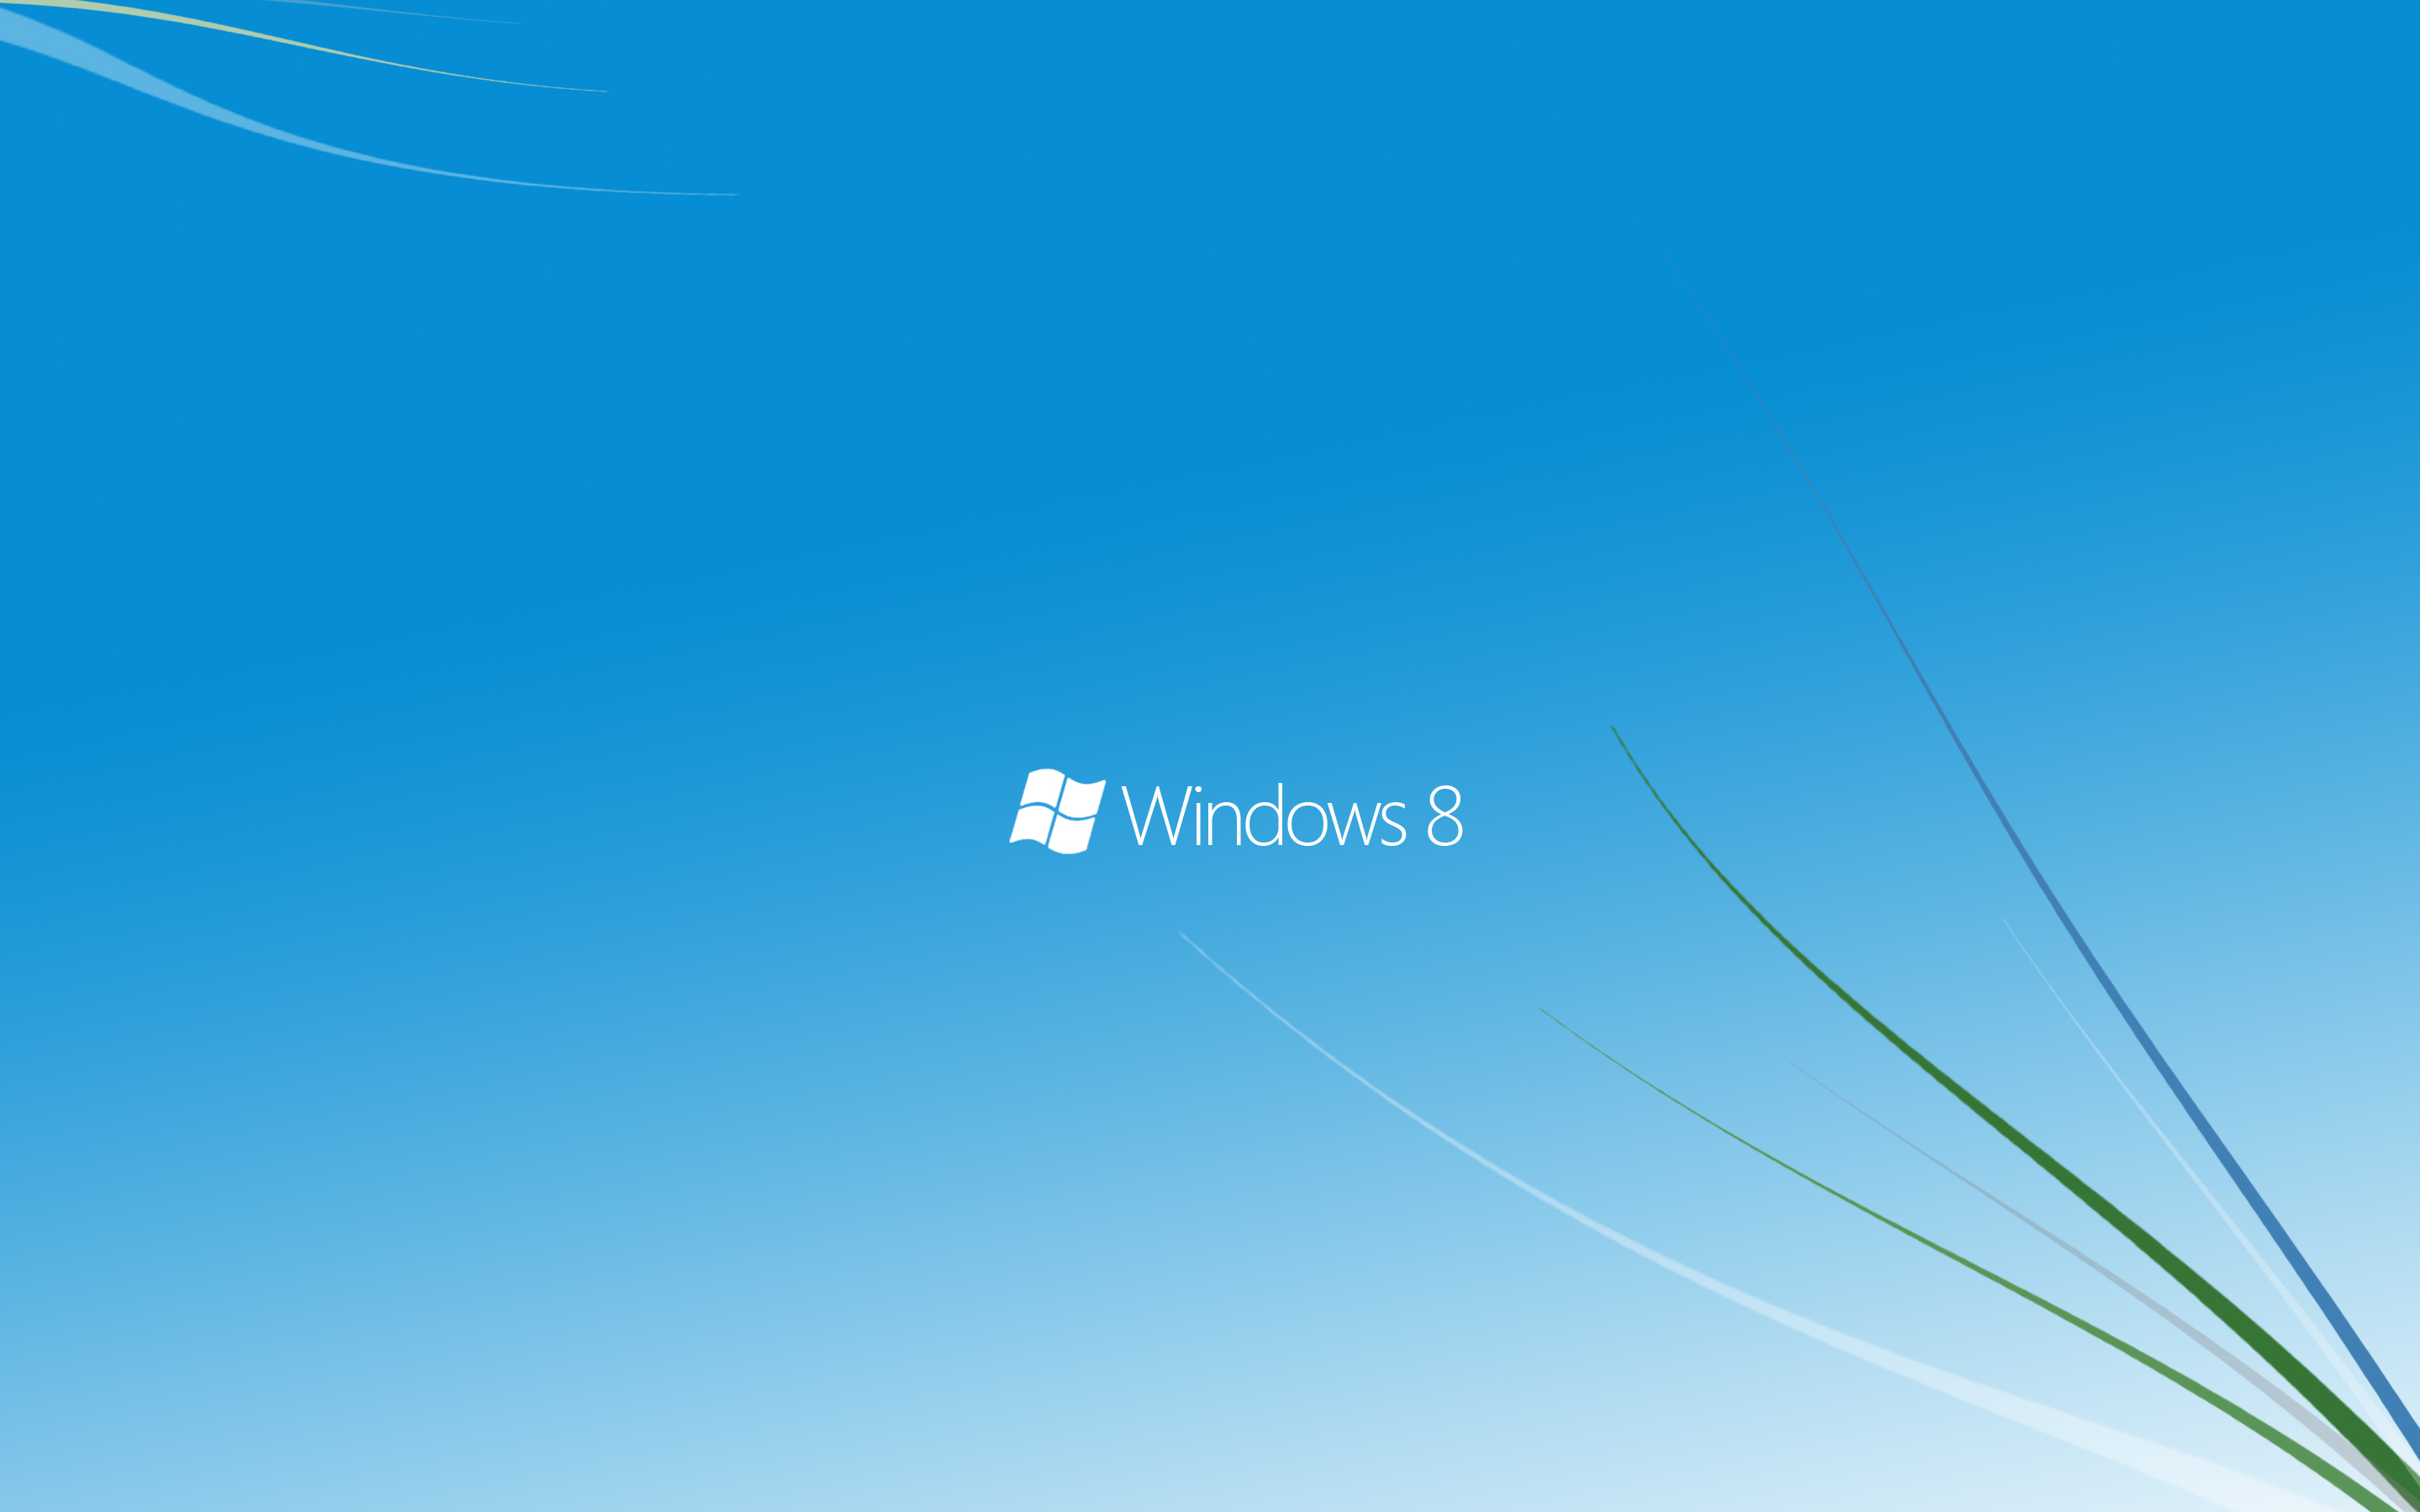 Sqare Beautiful Windows 8 Free Wallpapers in High Quality Free HD ...